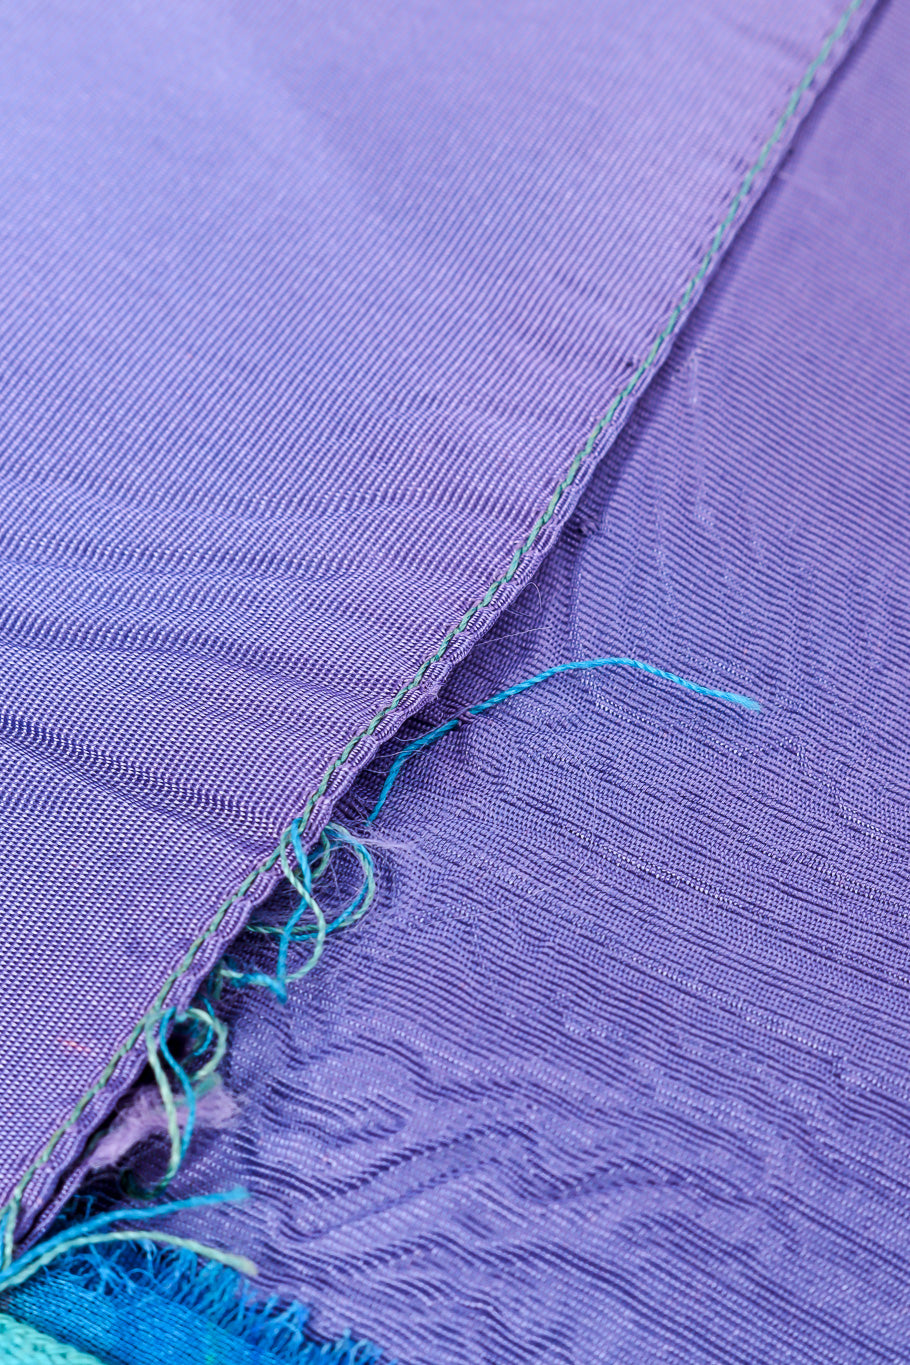 Vintage Mr. Frank Abstract Swirl Silk Dress split seam on lining closeup @Recessla